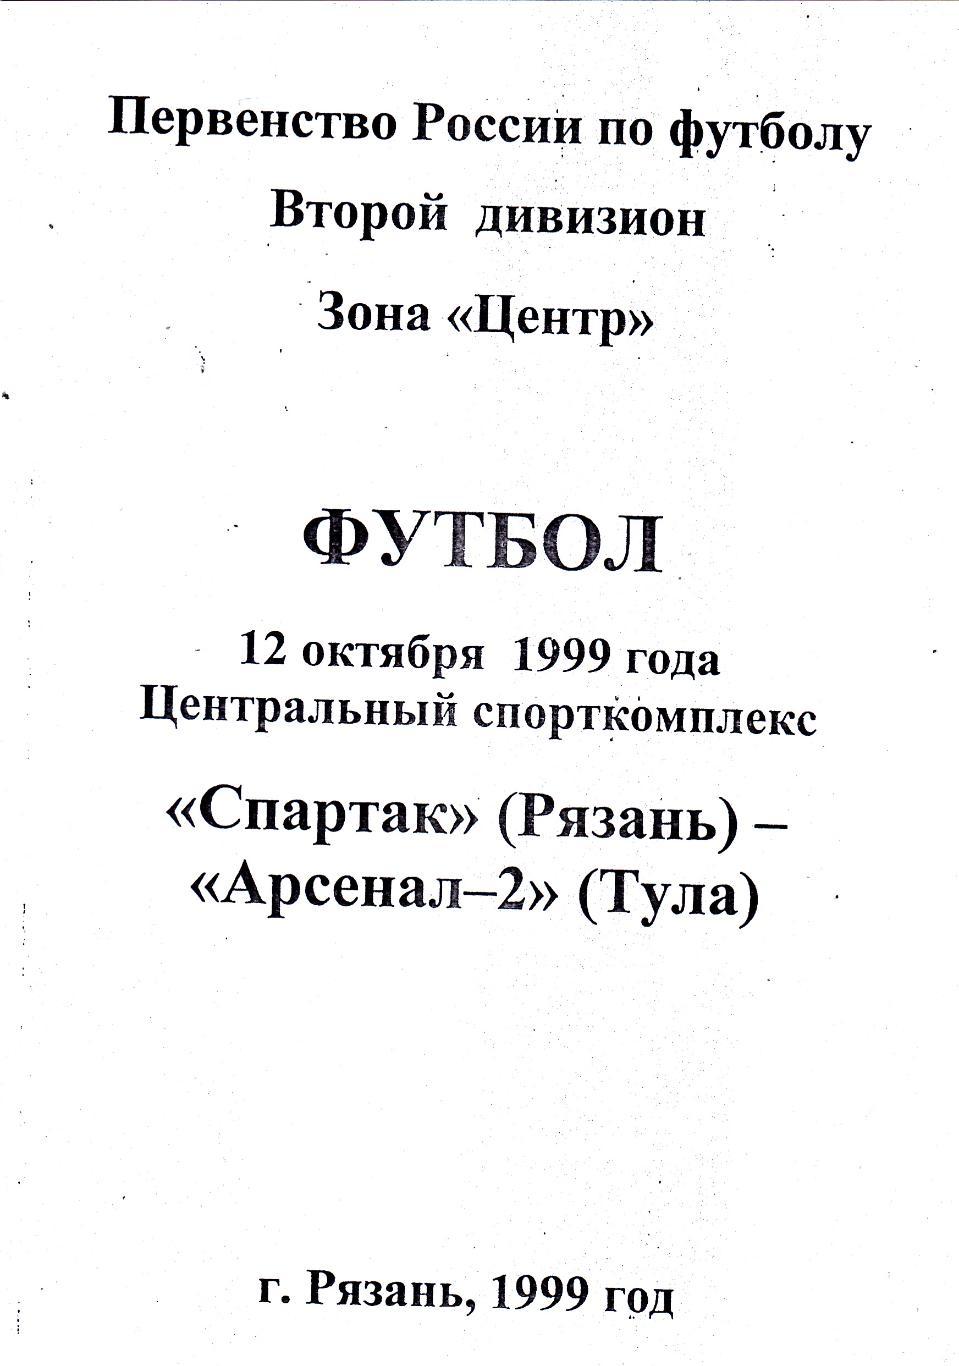 Спартак (Рязань) - Арсенал-2 (Тула) 12.10.1999